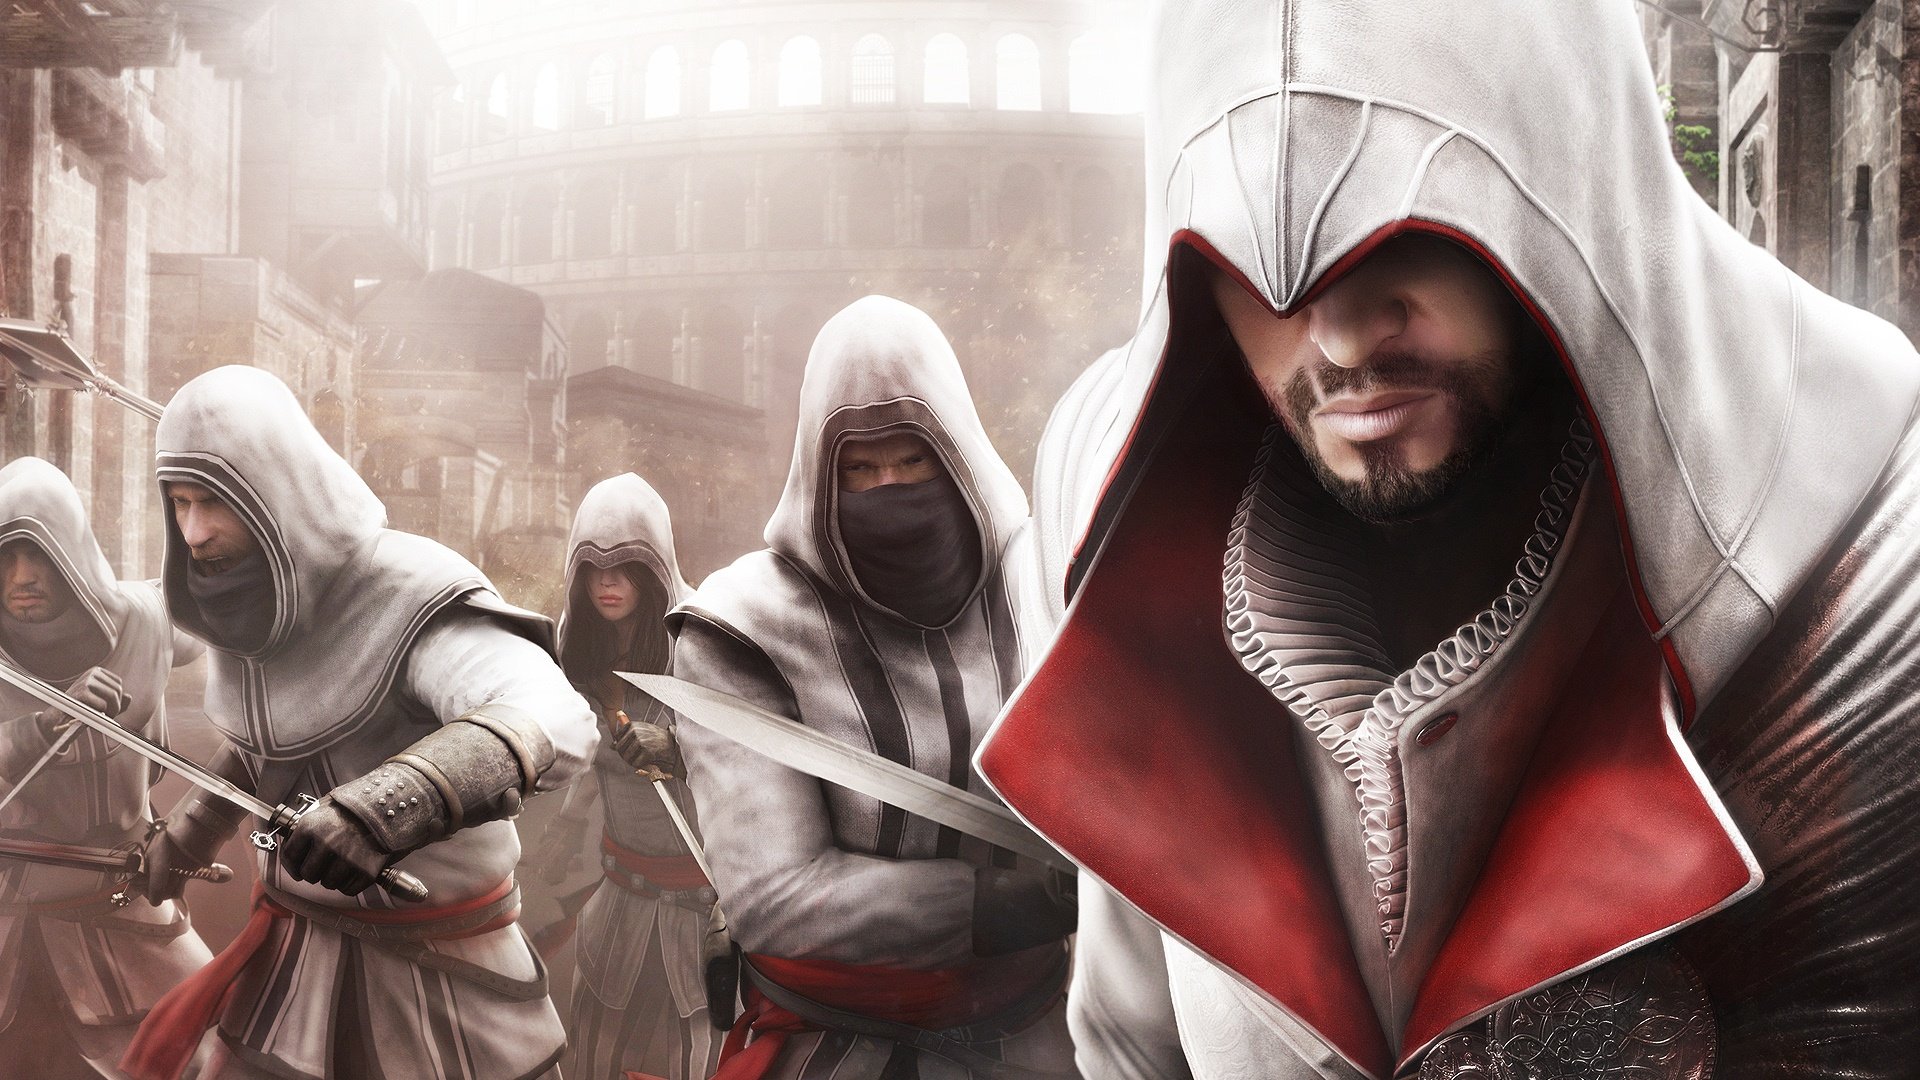 Brotherhood на русском. Assassin's Creed Эцио. Assassin's Creed 2 Brotherhood. Ассасин Крид 2 Эцио. Ассасин Крид братство крови Эцио.